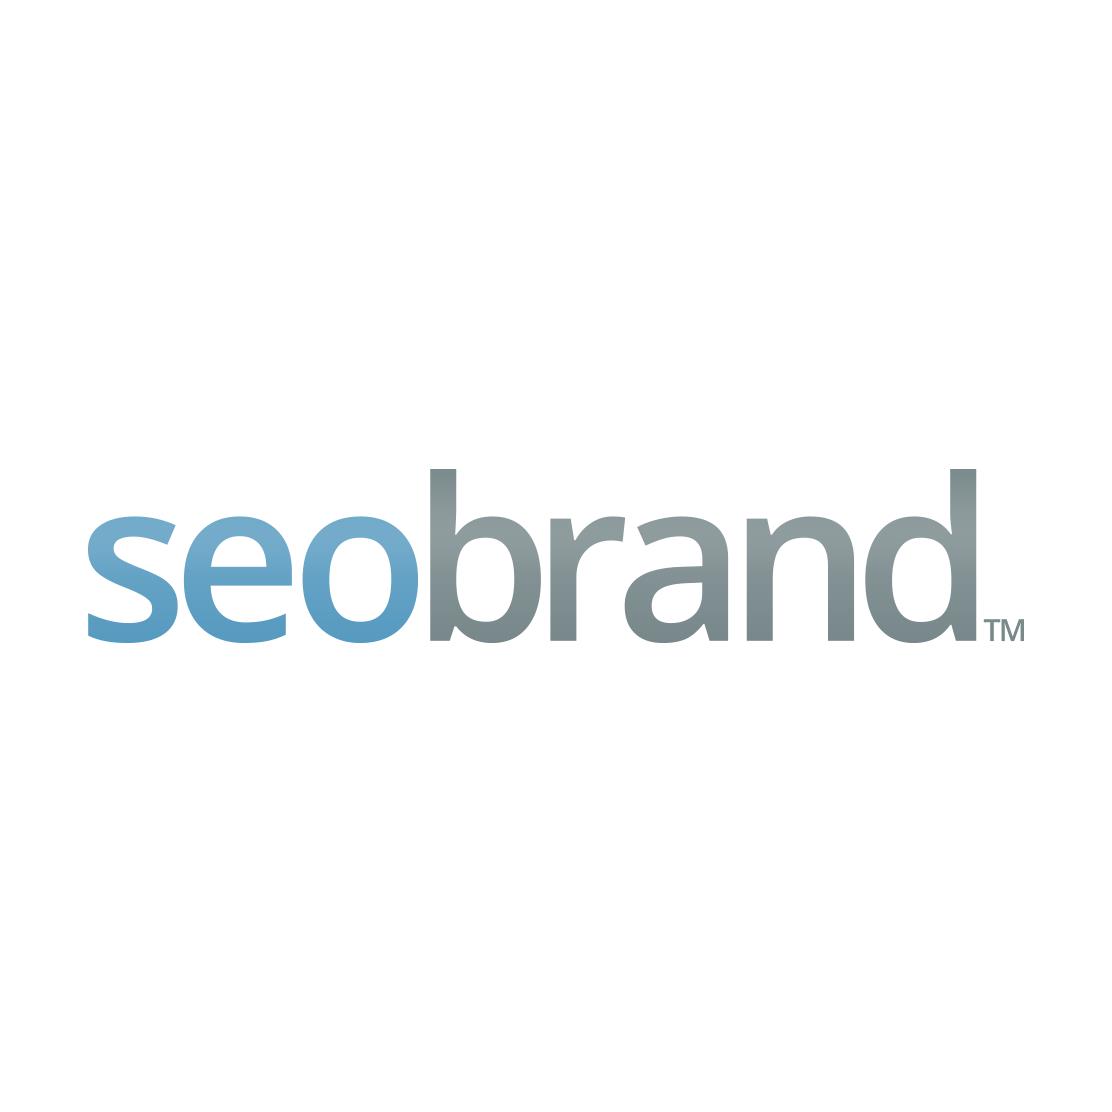 Best Reputation Management Firm Logo: SEO Brand